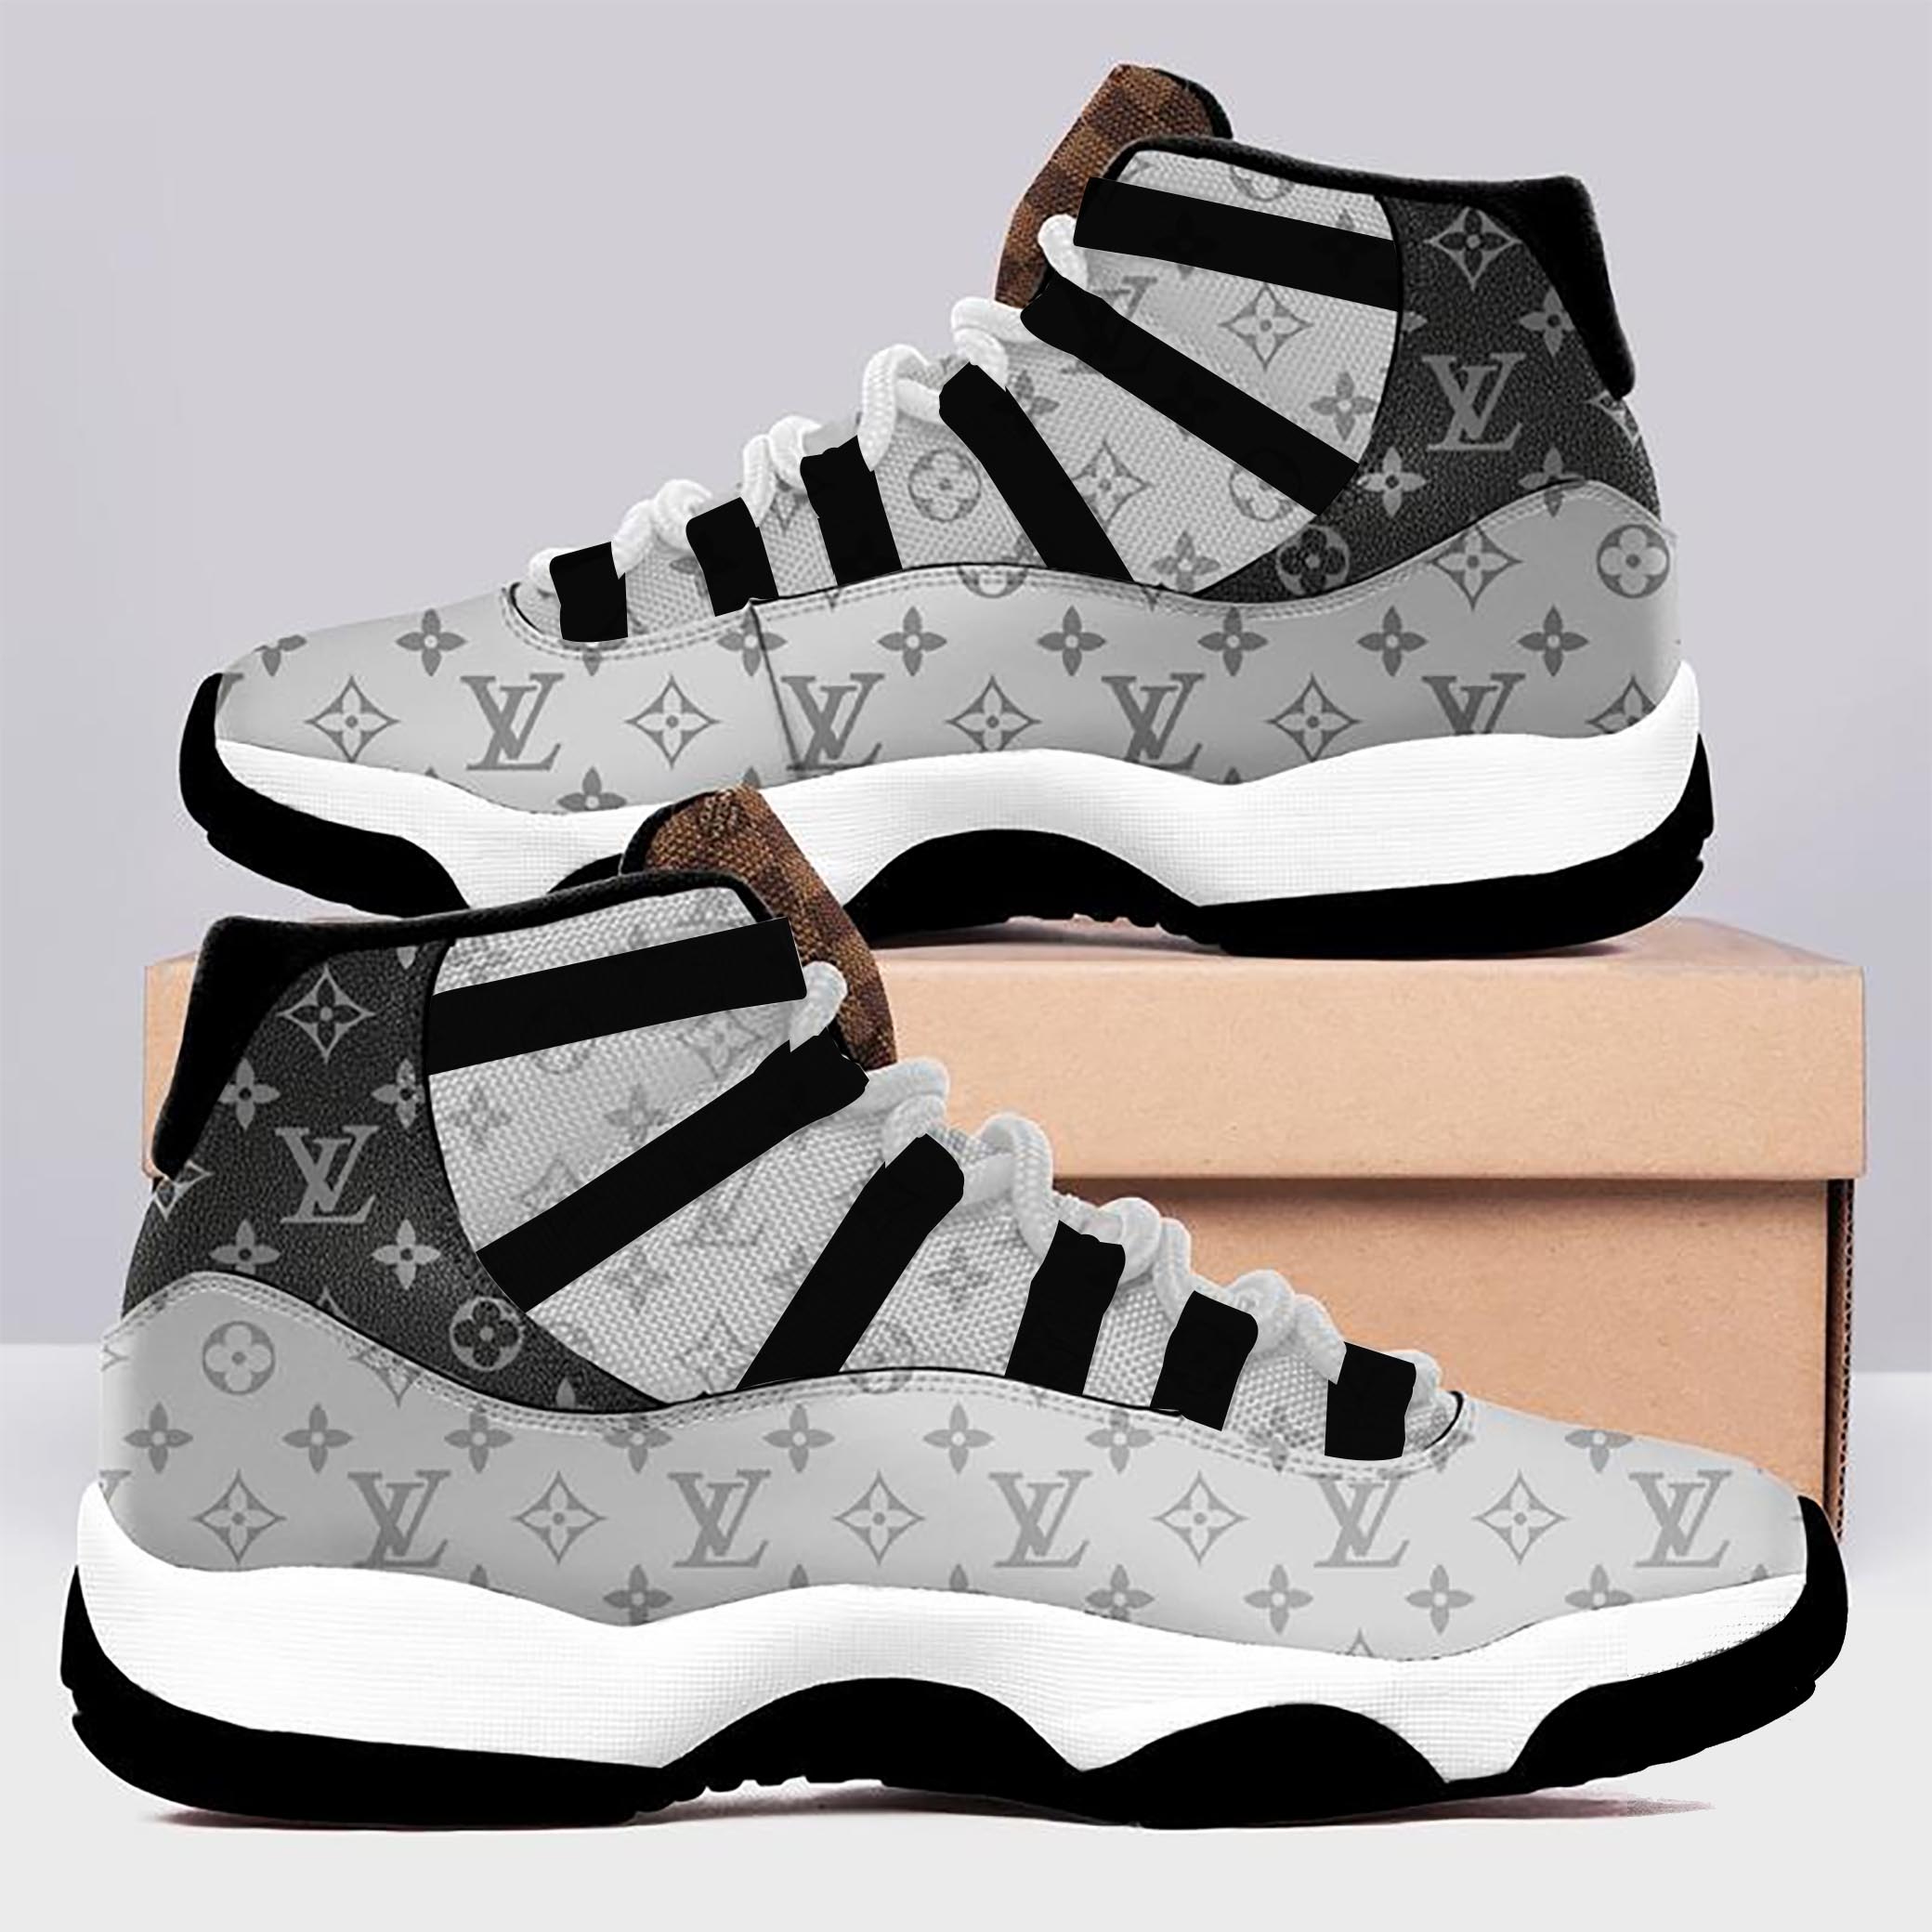 Louis Vuitton Black Grey Air Jordan 11 Sneakers Shoes Hot 2022 LV Gifts For Men Women HT